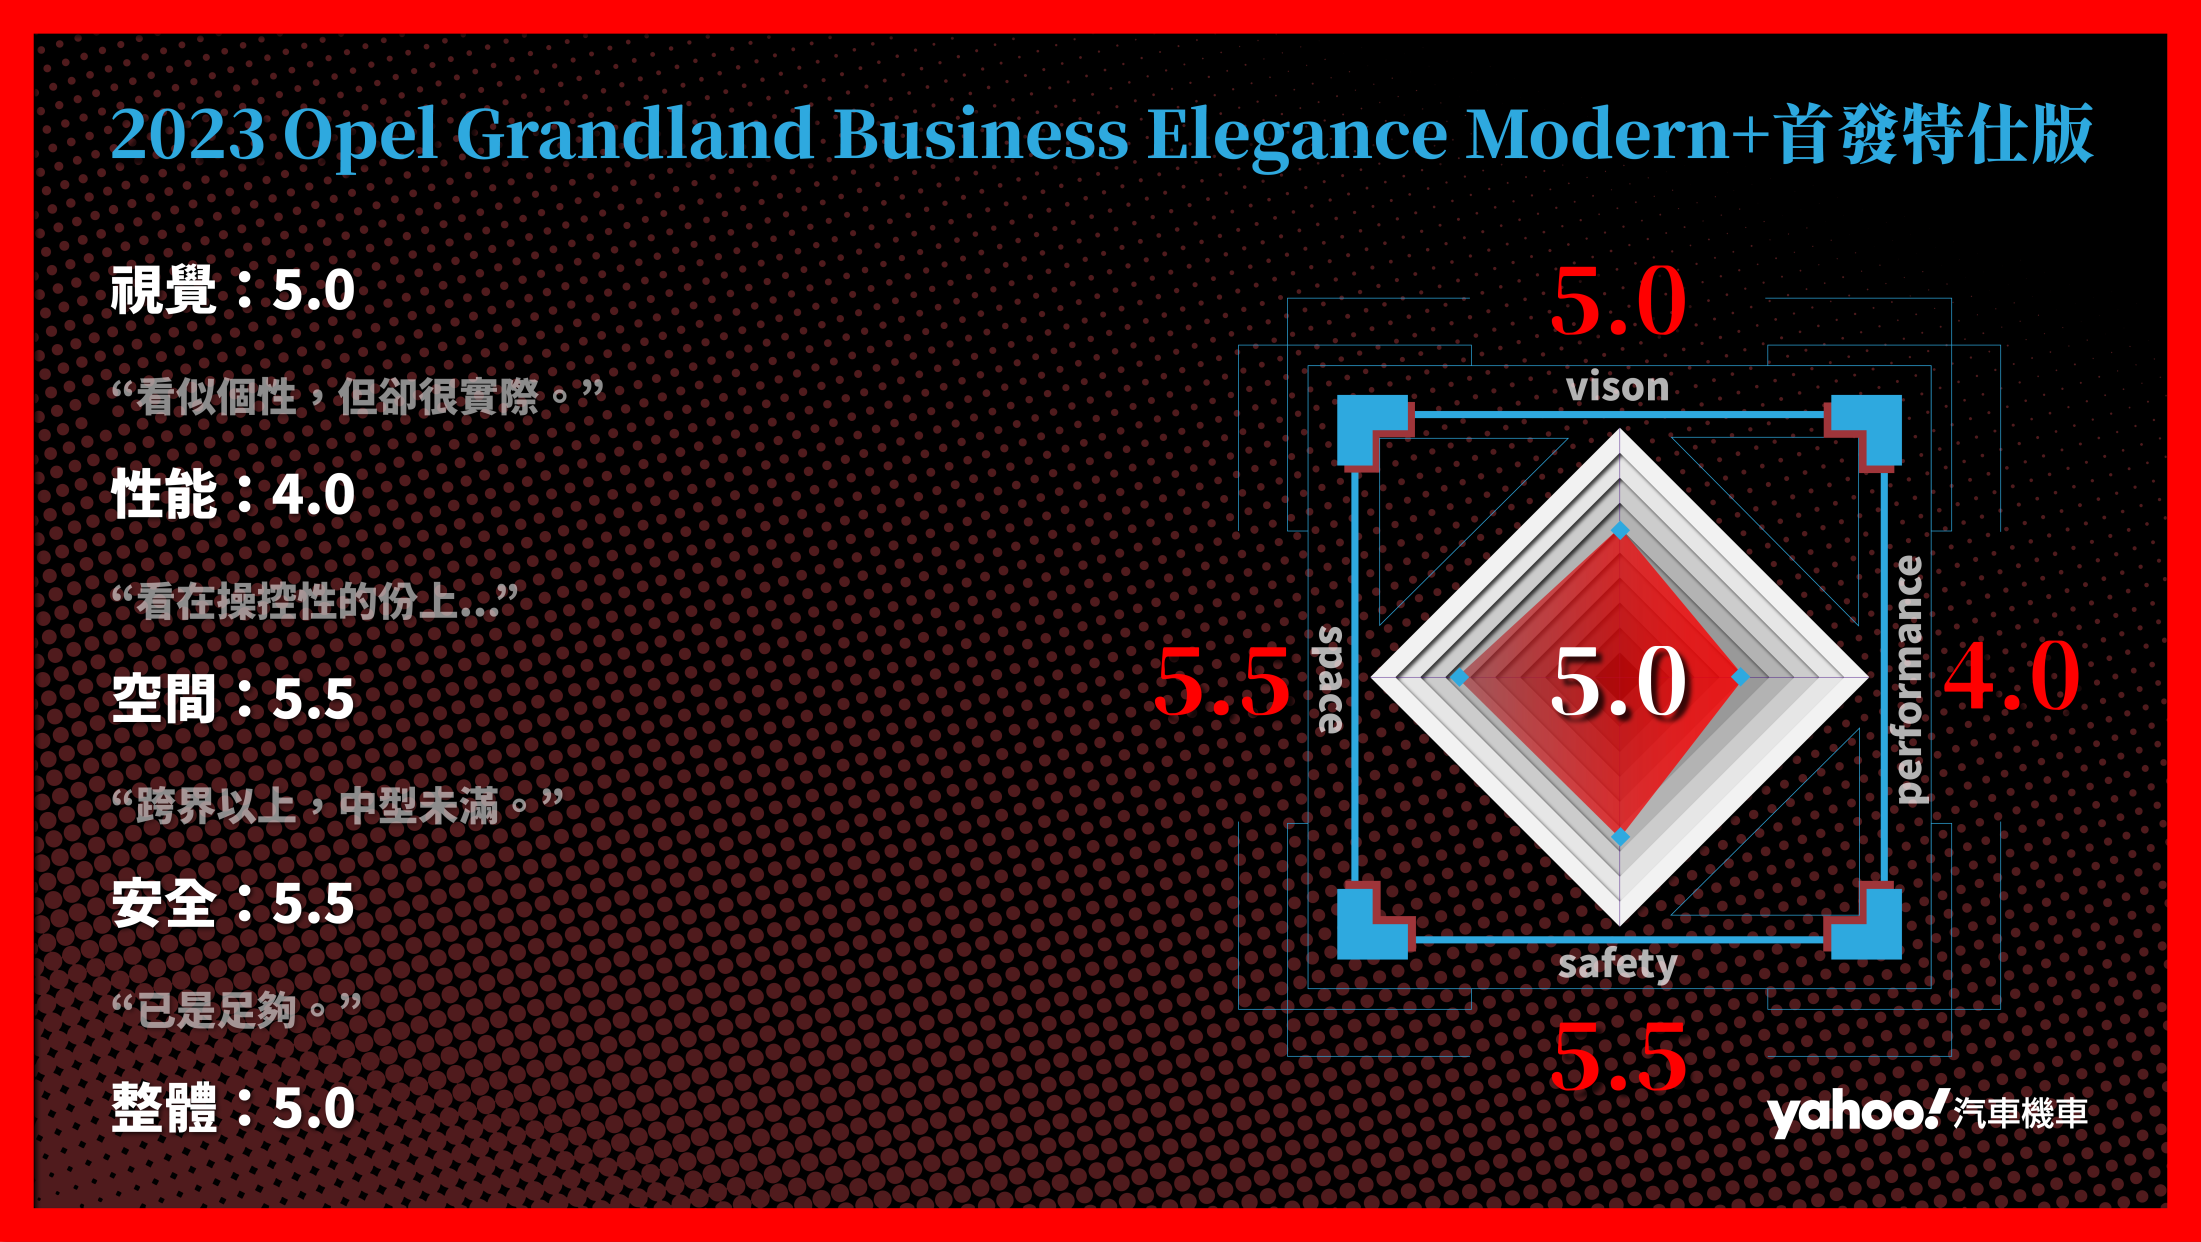 2023 Opel Grandland Business Elegance Modern+首發特仕版 分項評比。